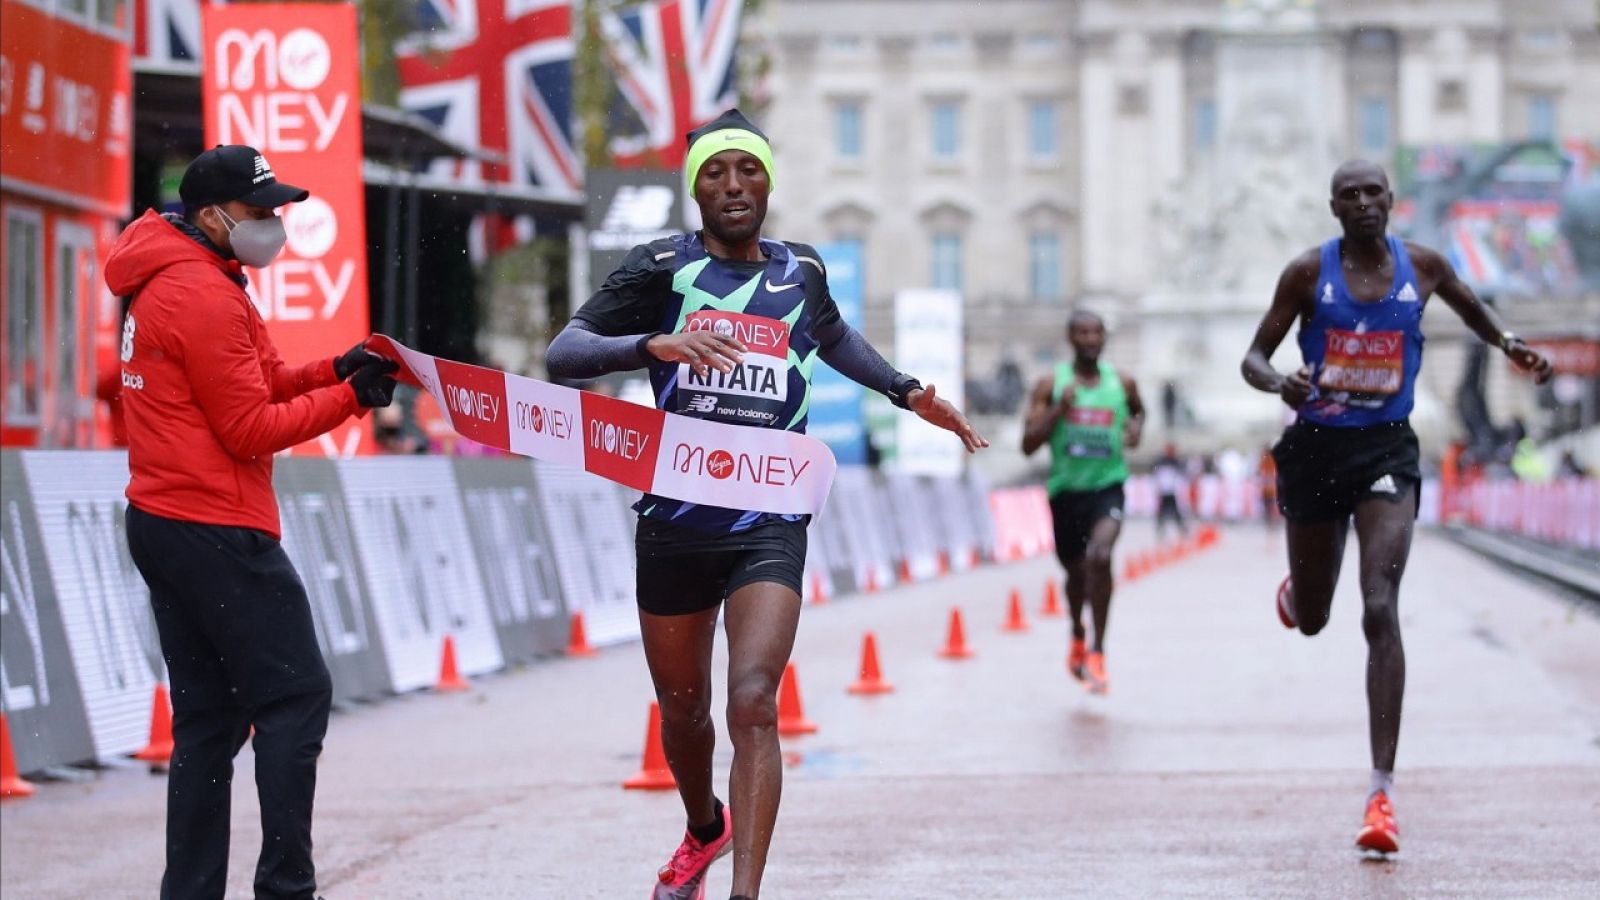 Atletismo | Kipchoge se hunde en el maratón de Londres que gana Kitata 